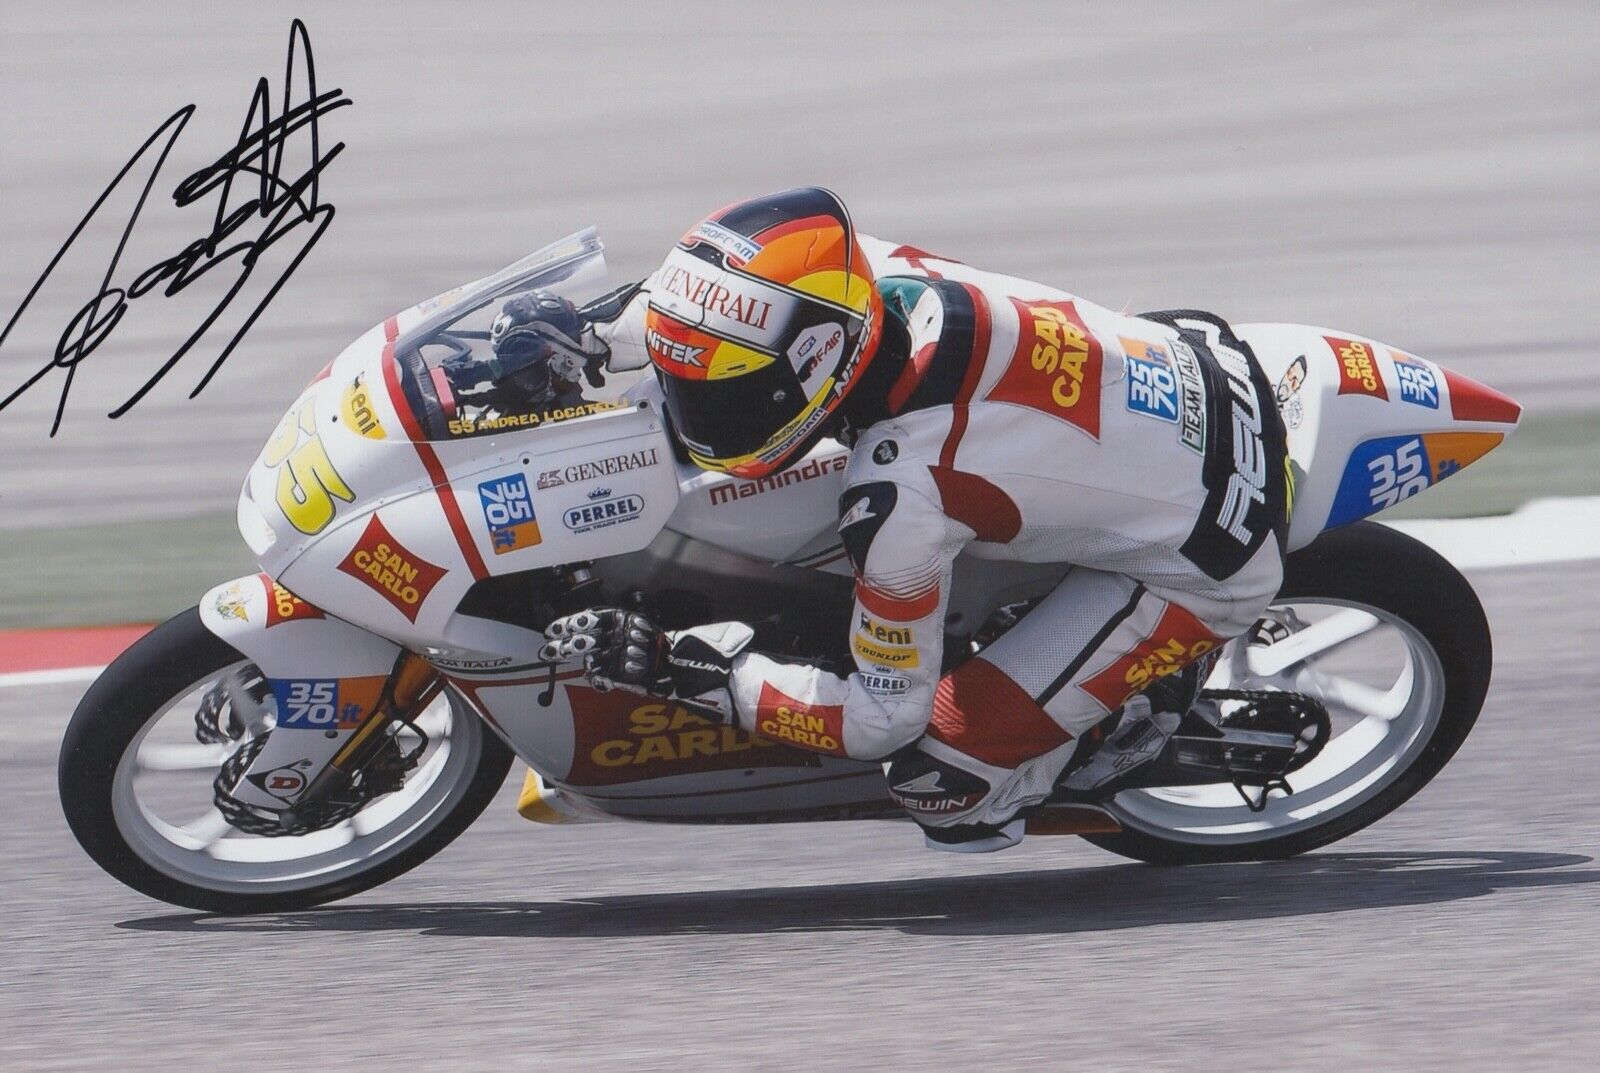 Andrea Locatelli Hand Signed 12x8 Photo Poster painting MotoGP Autograph San Carlo Mahindra 1